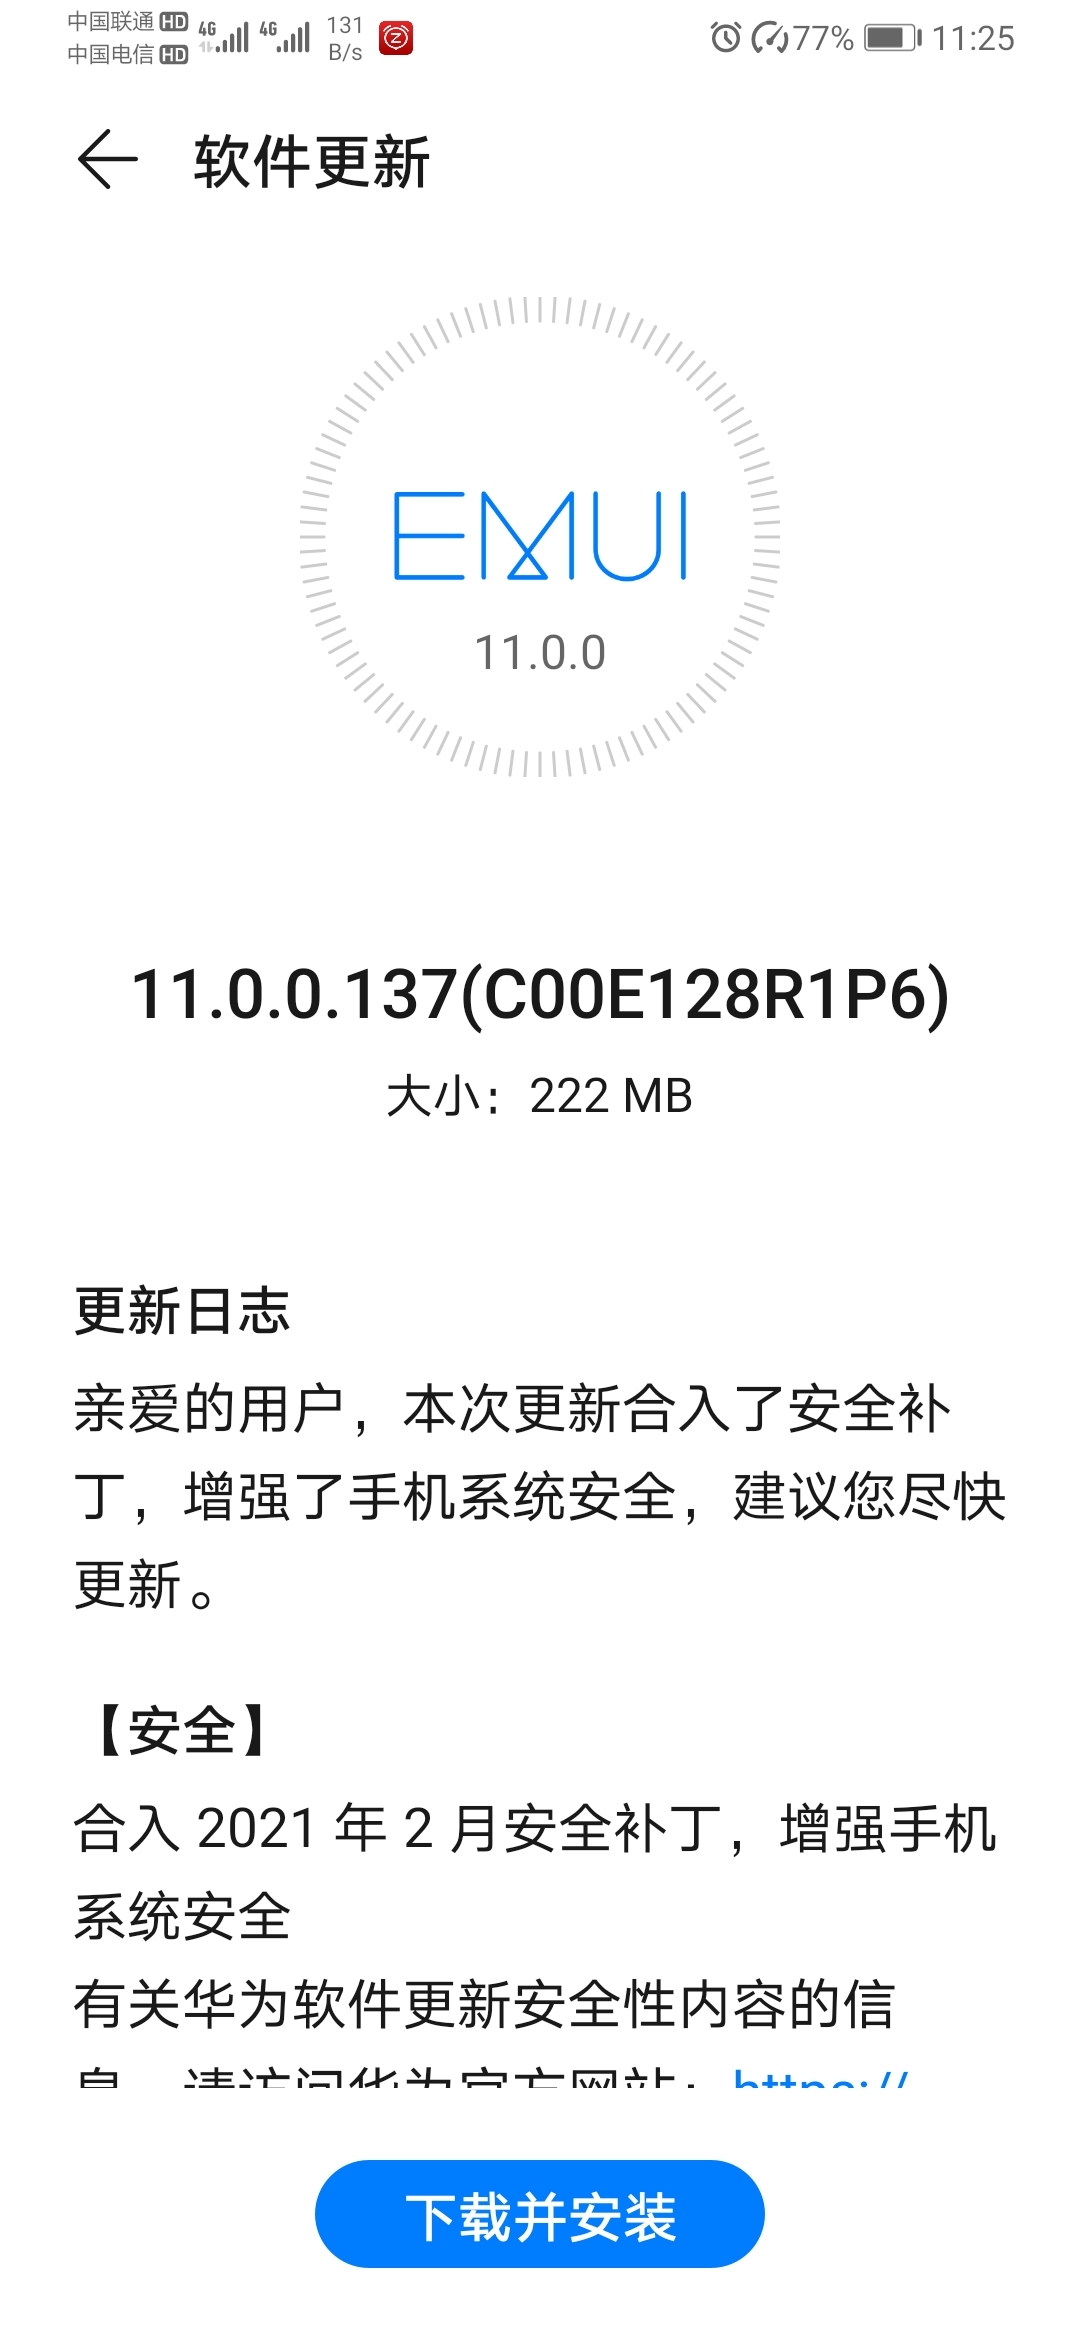 Huawei P30 Series EMUI 11.0.0.137